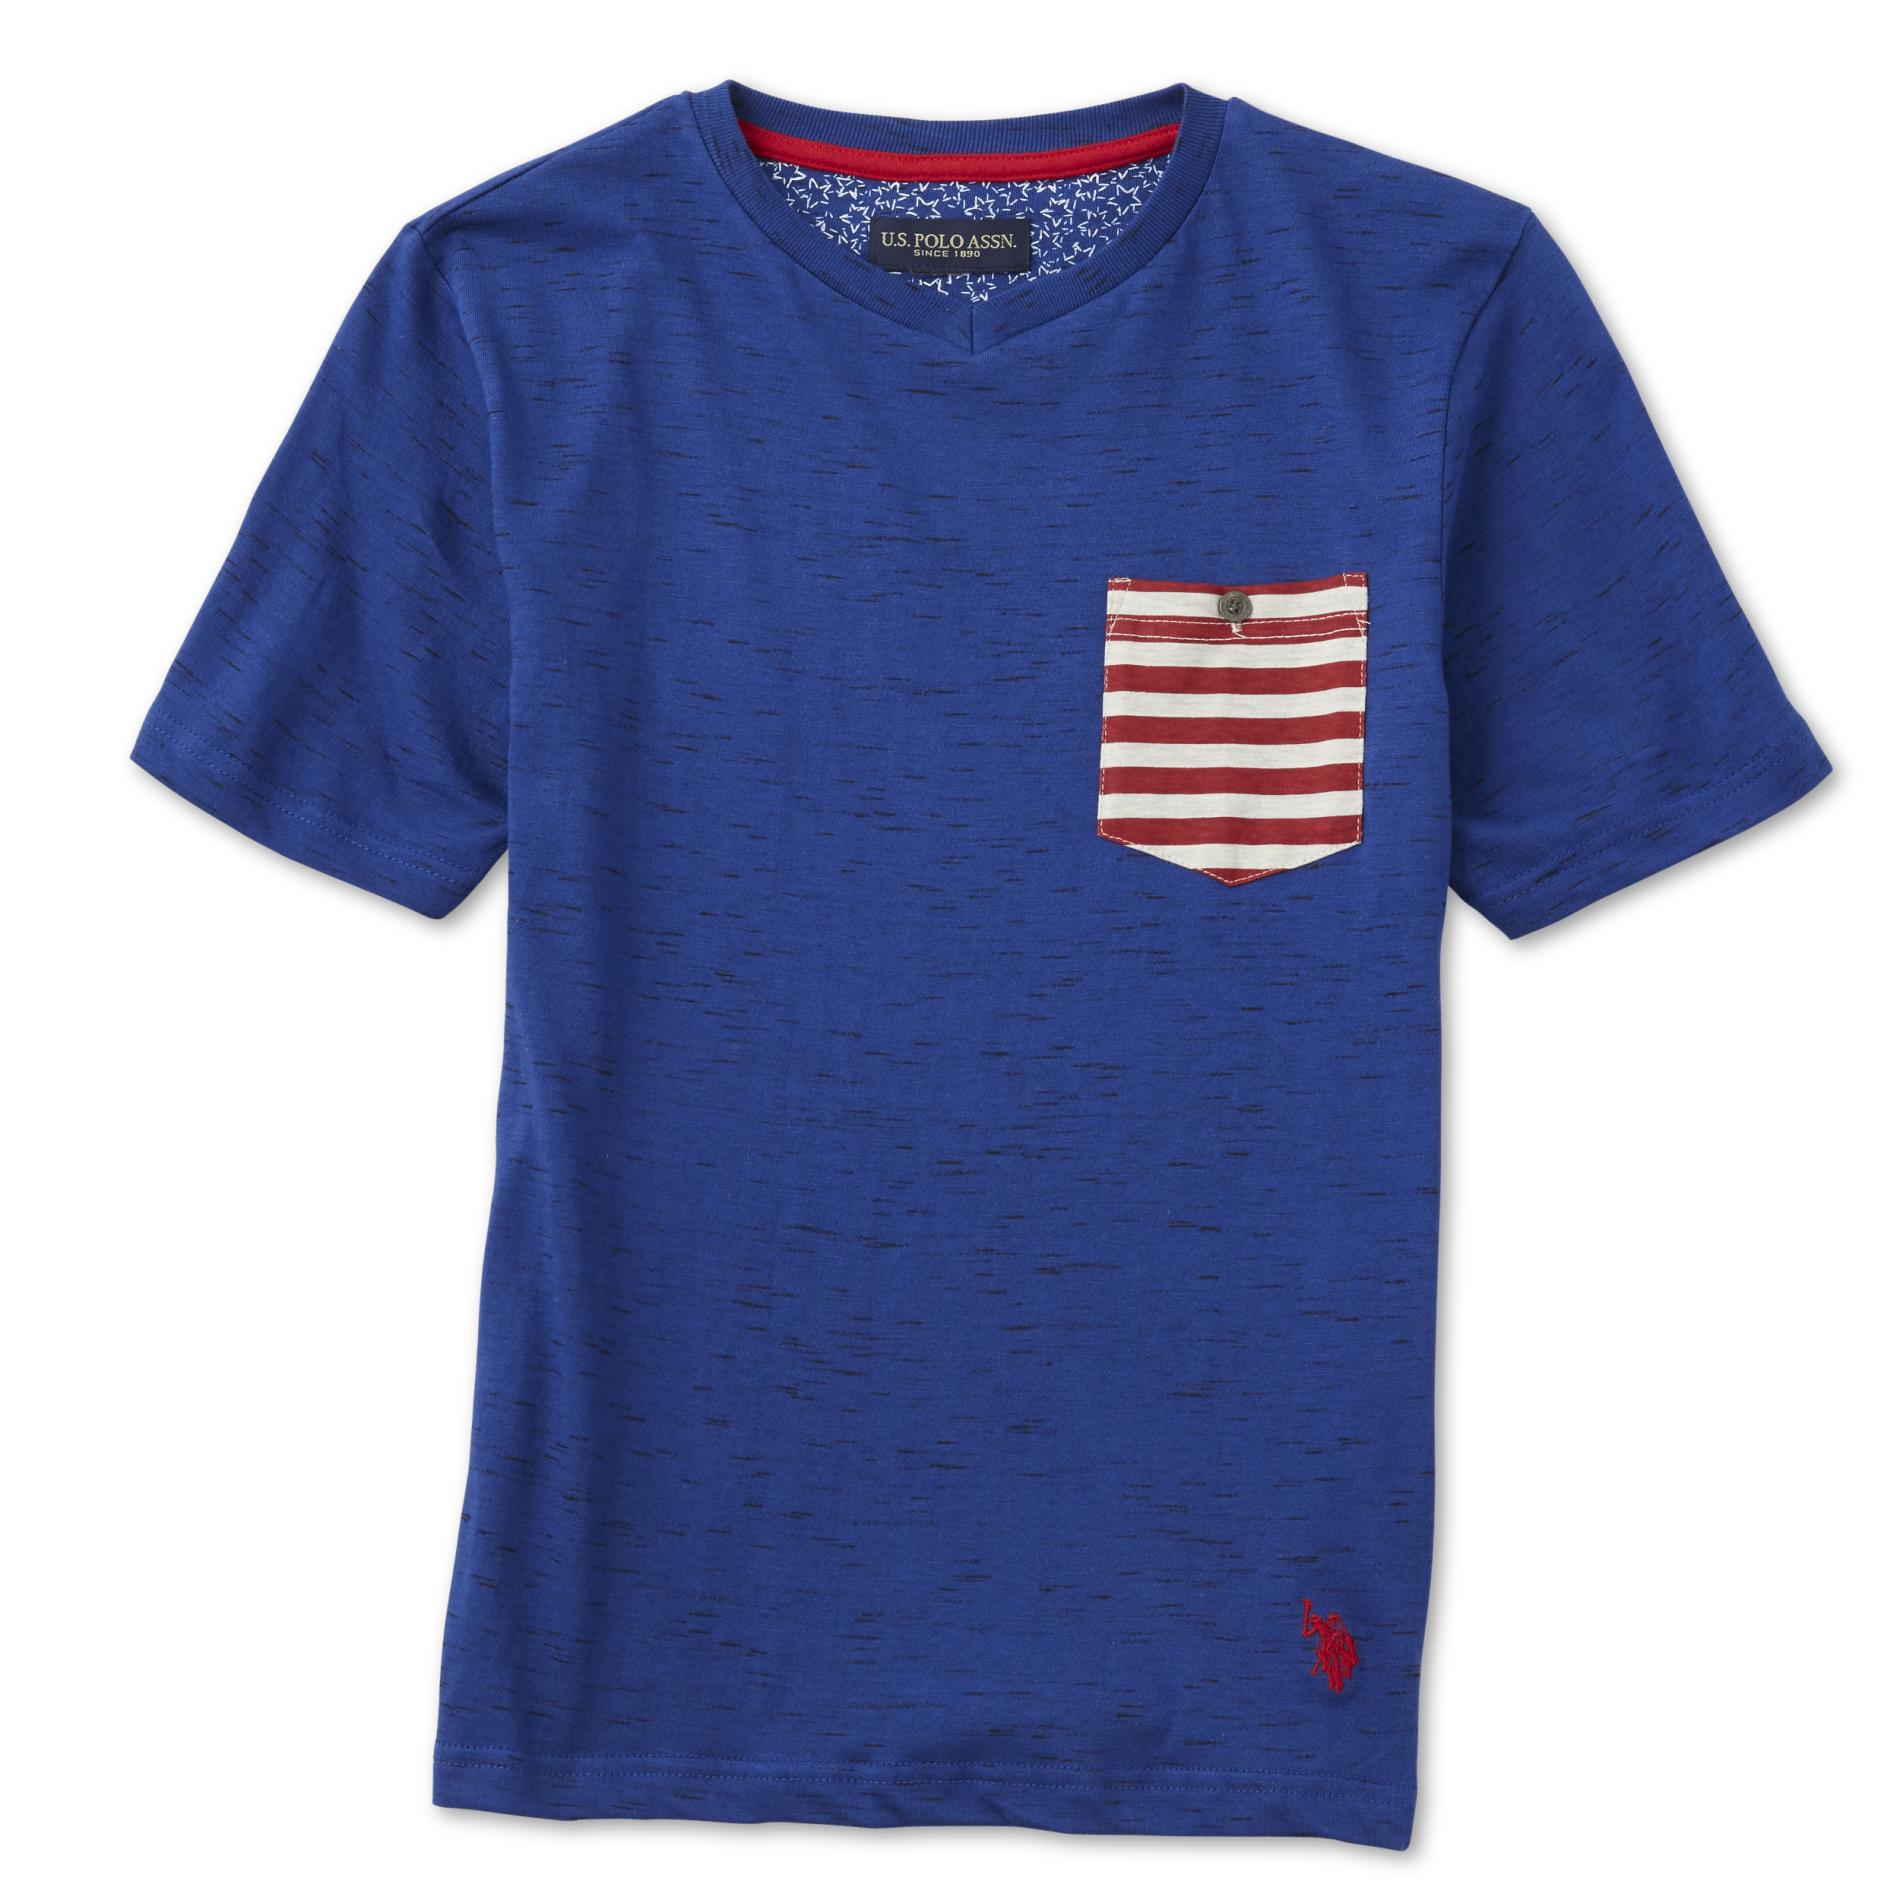 U.S. Polo Assn. Boys' Pocket T-Shirt - Space Dyed